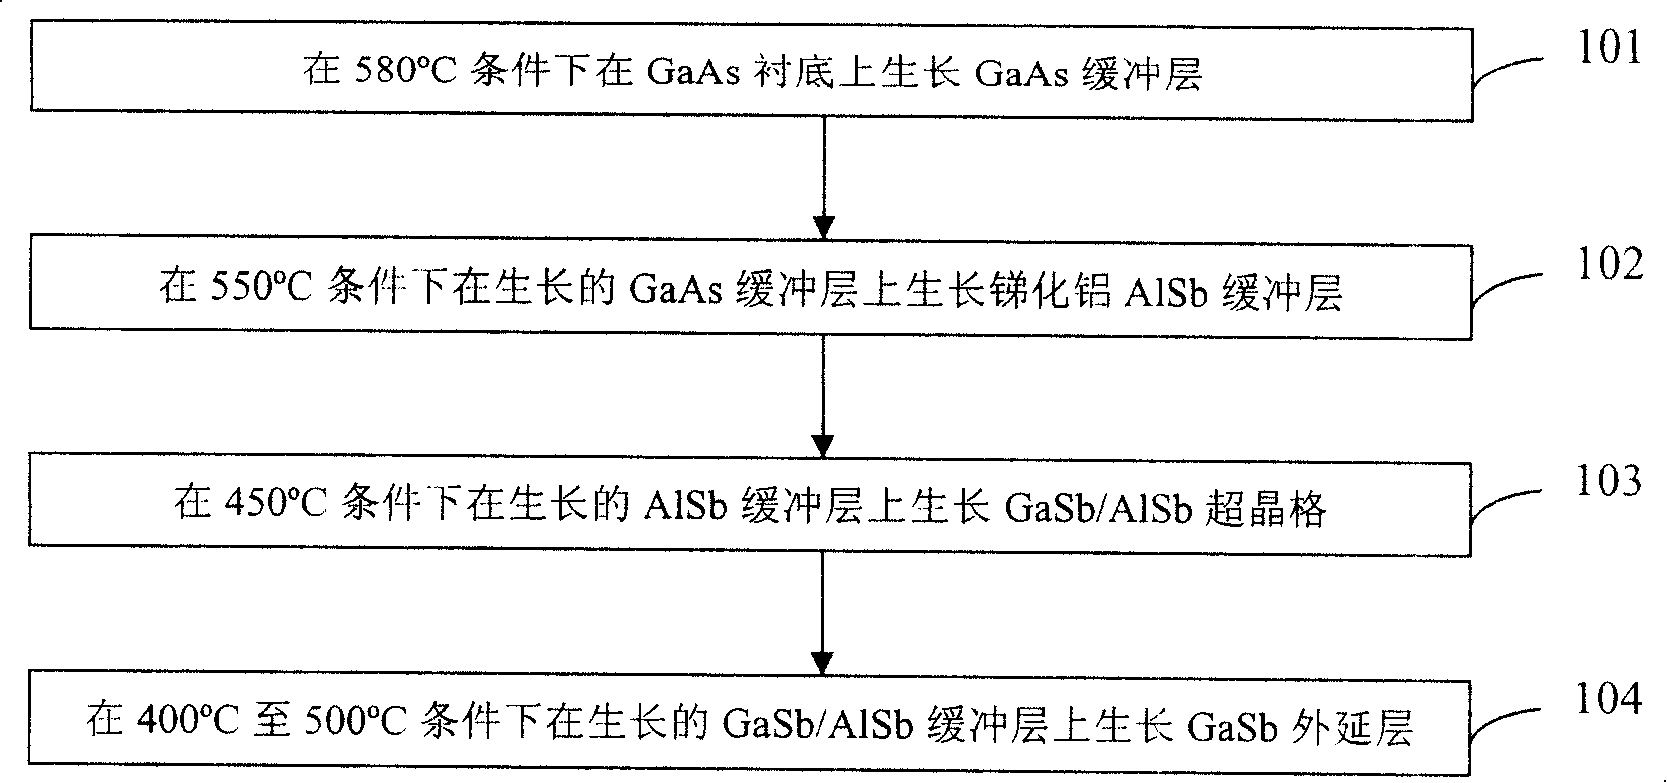 Method for epitaxial generation of gallium antimonide on gallium arsenide substrate